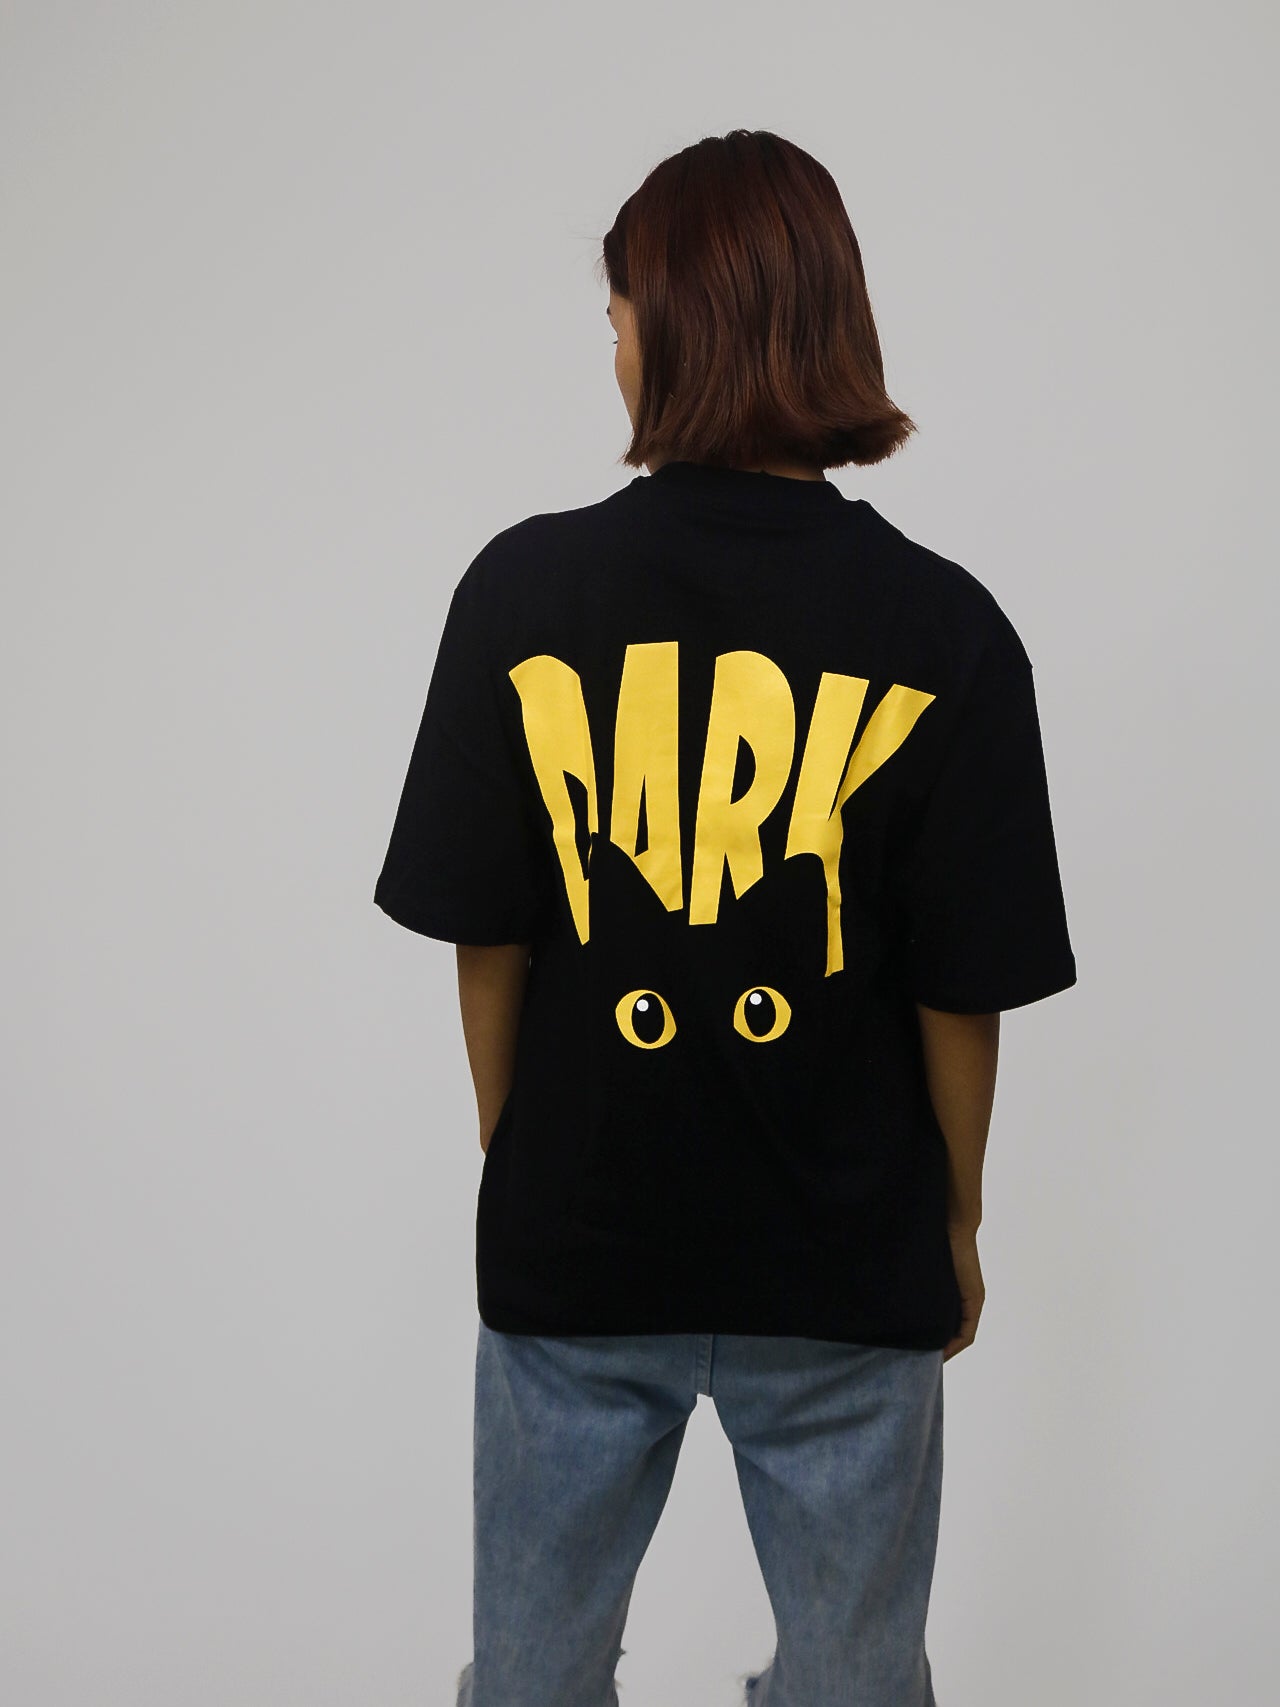 Dark Cat Oversized 100% Cotton Vantablack Printed Unisex T-Shirt